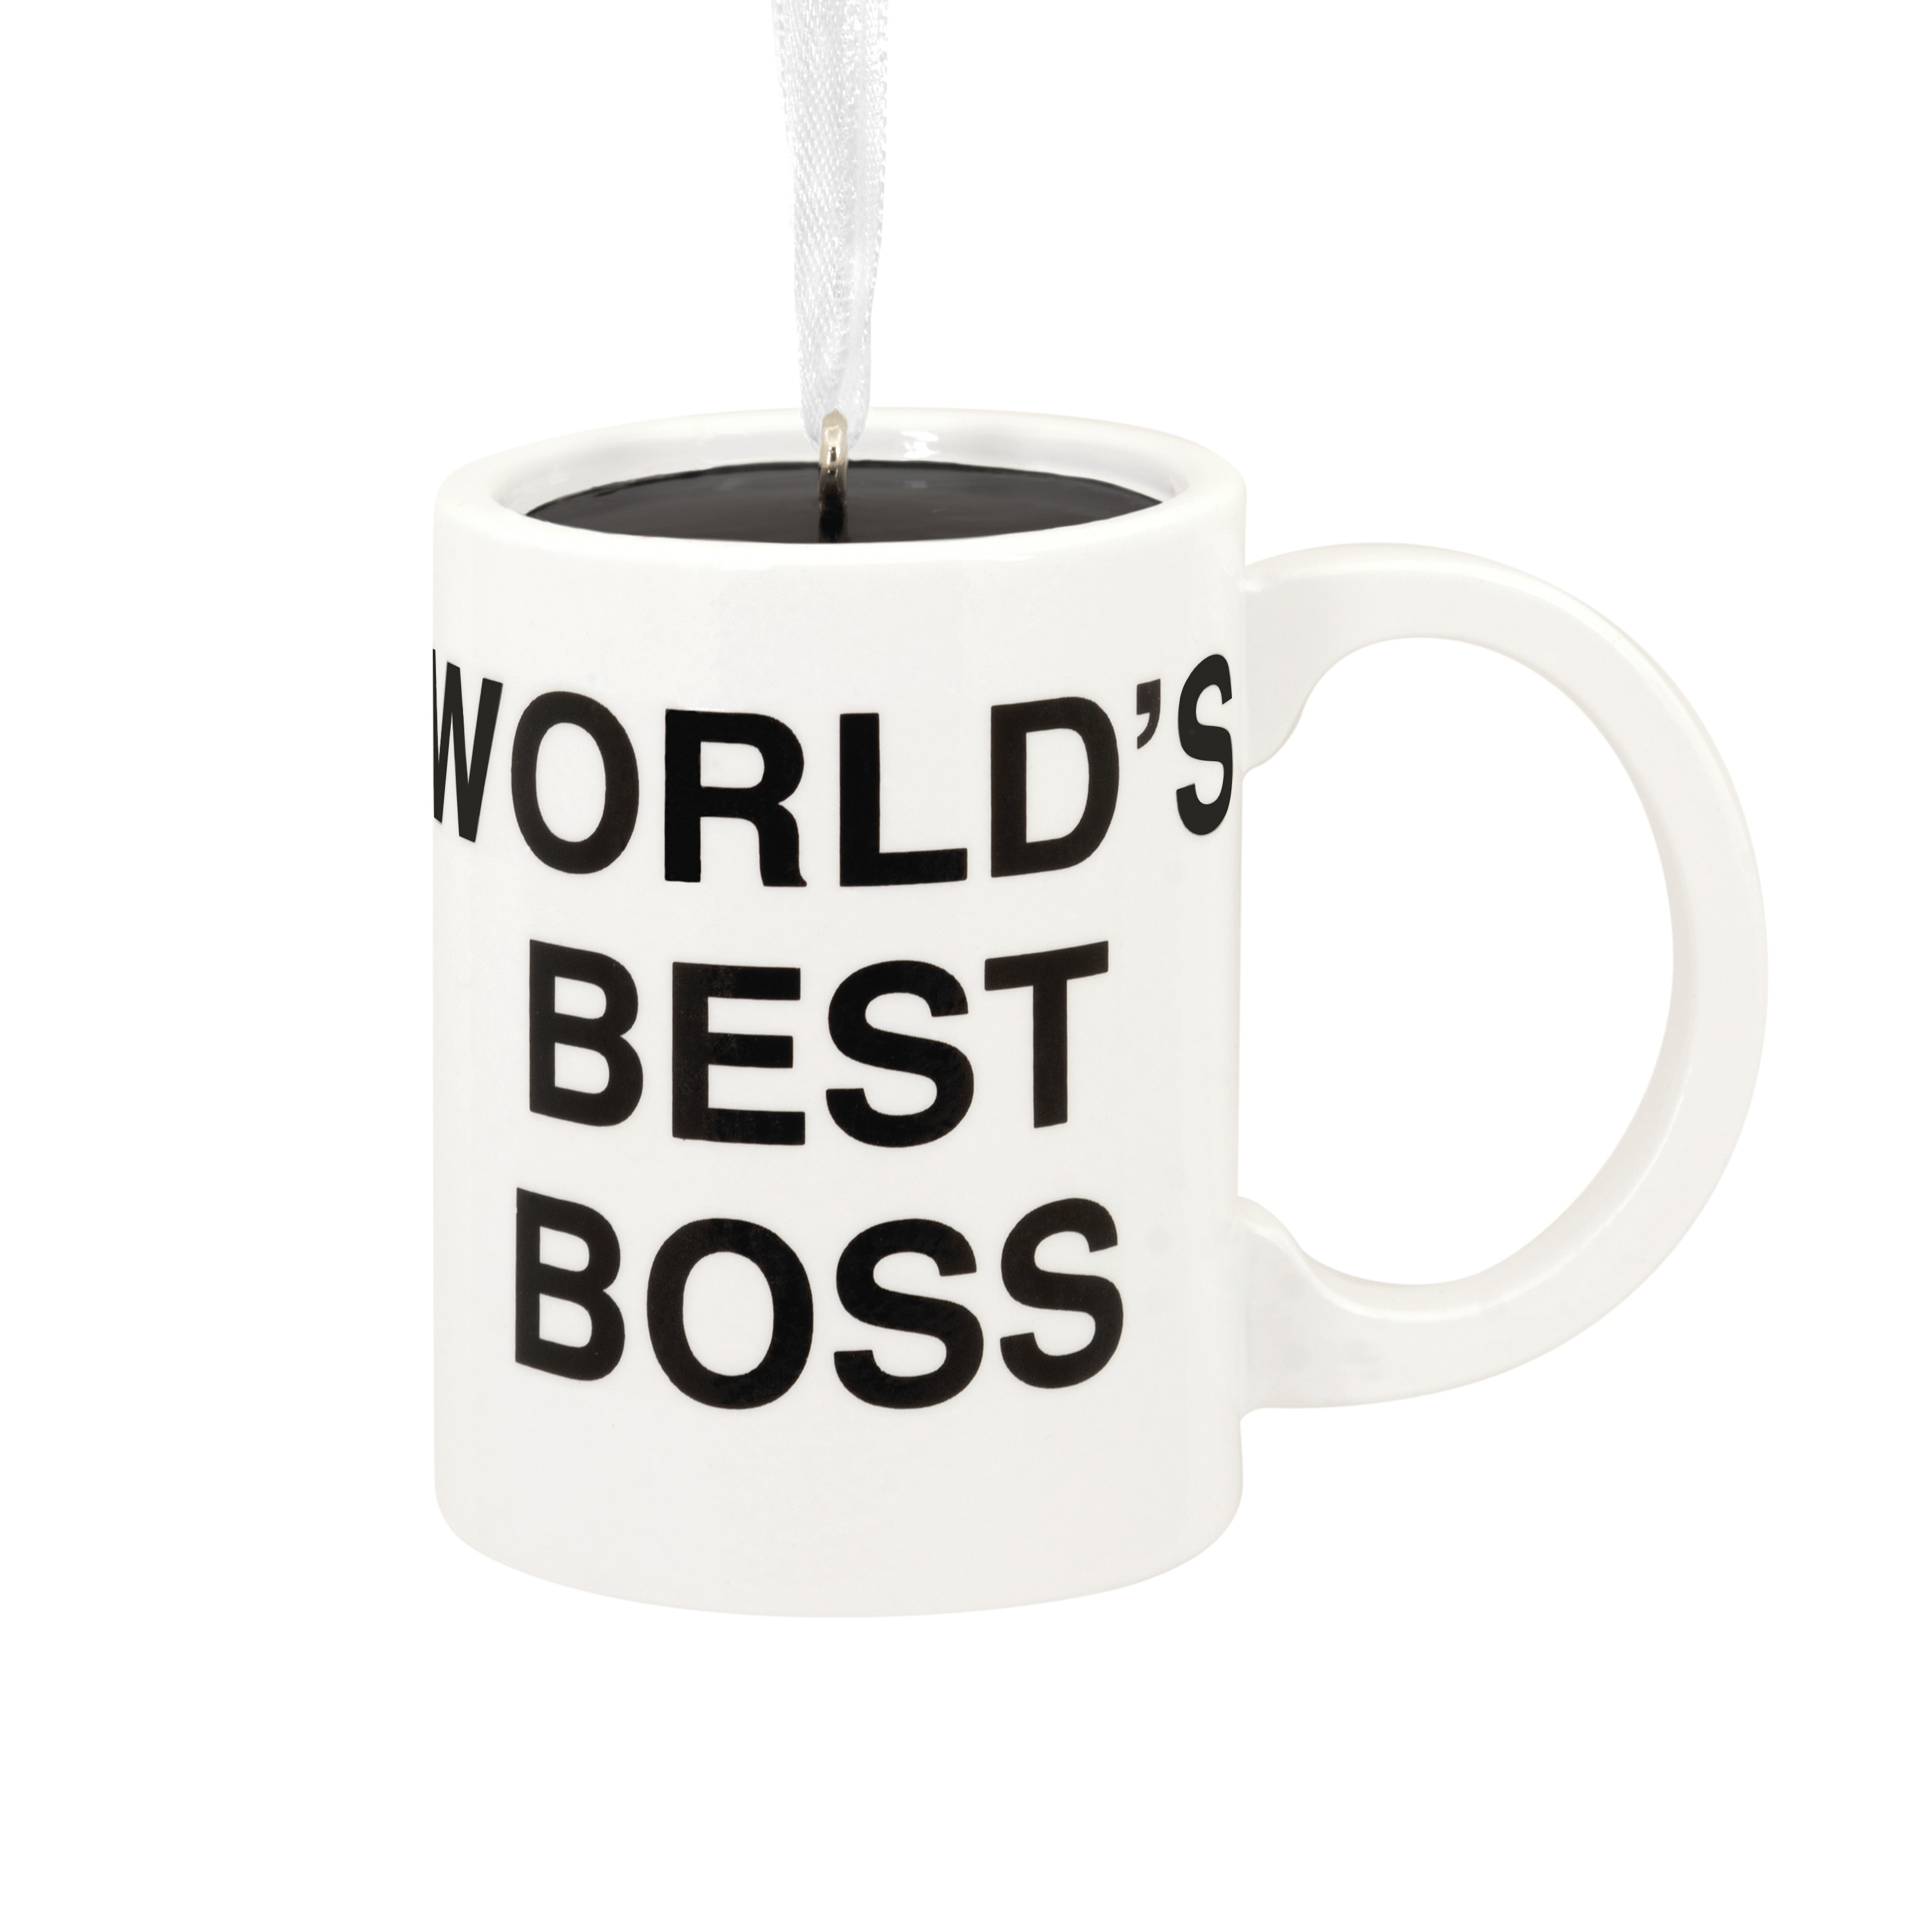 The Office Best Boss Mug 763795694006 nologo